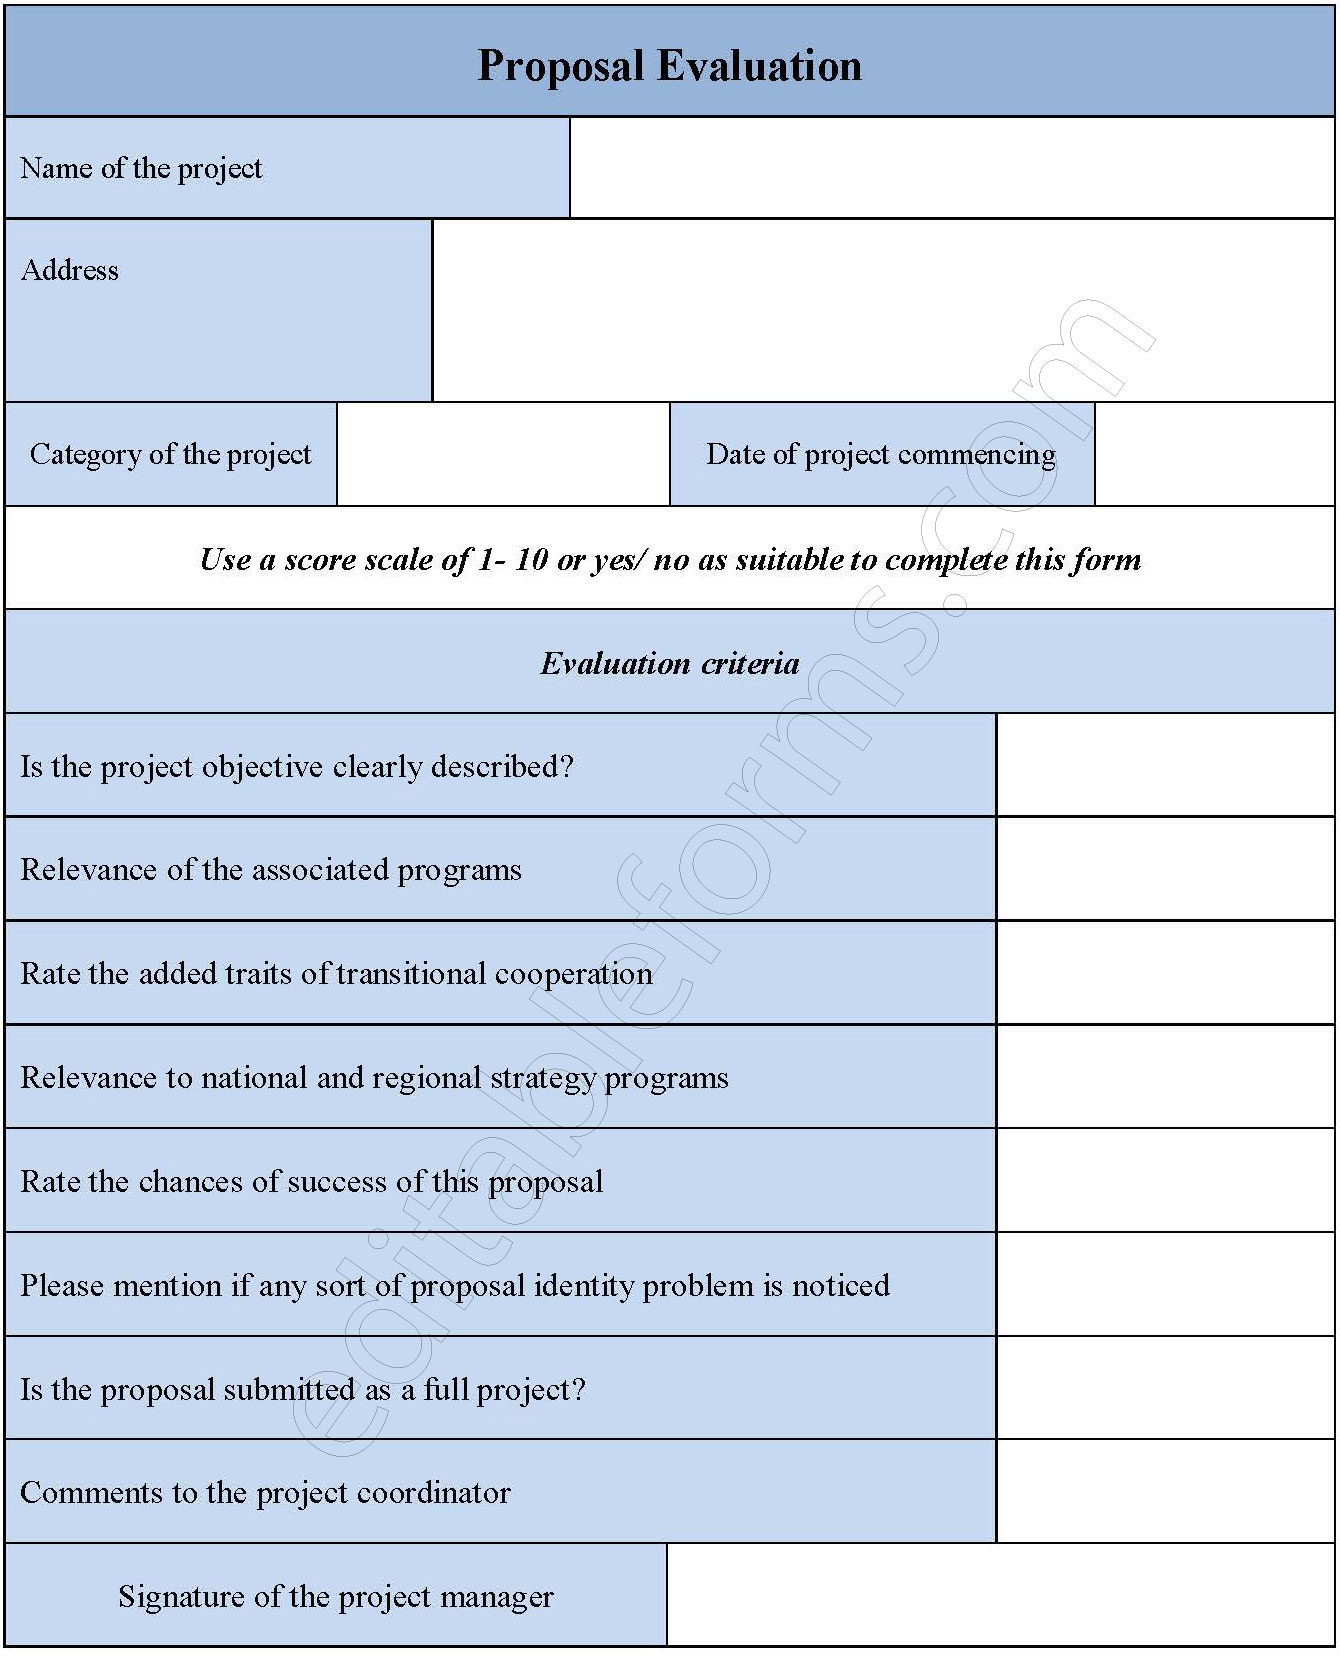 Proposal Evaluation Form